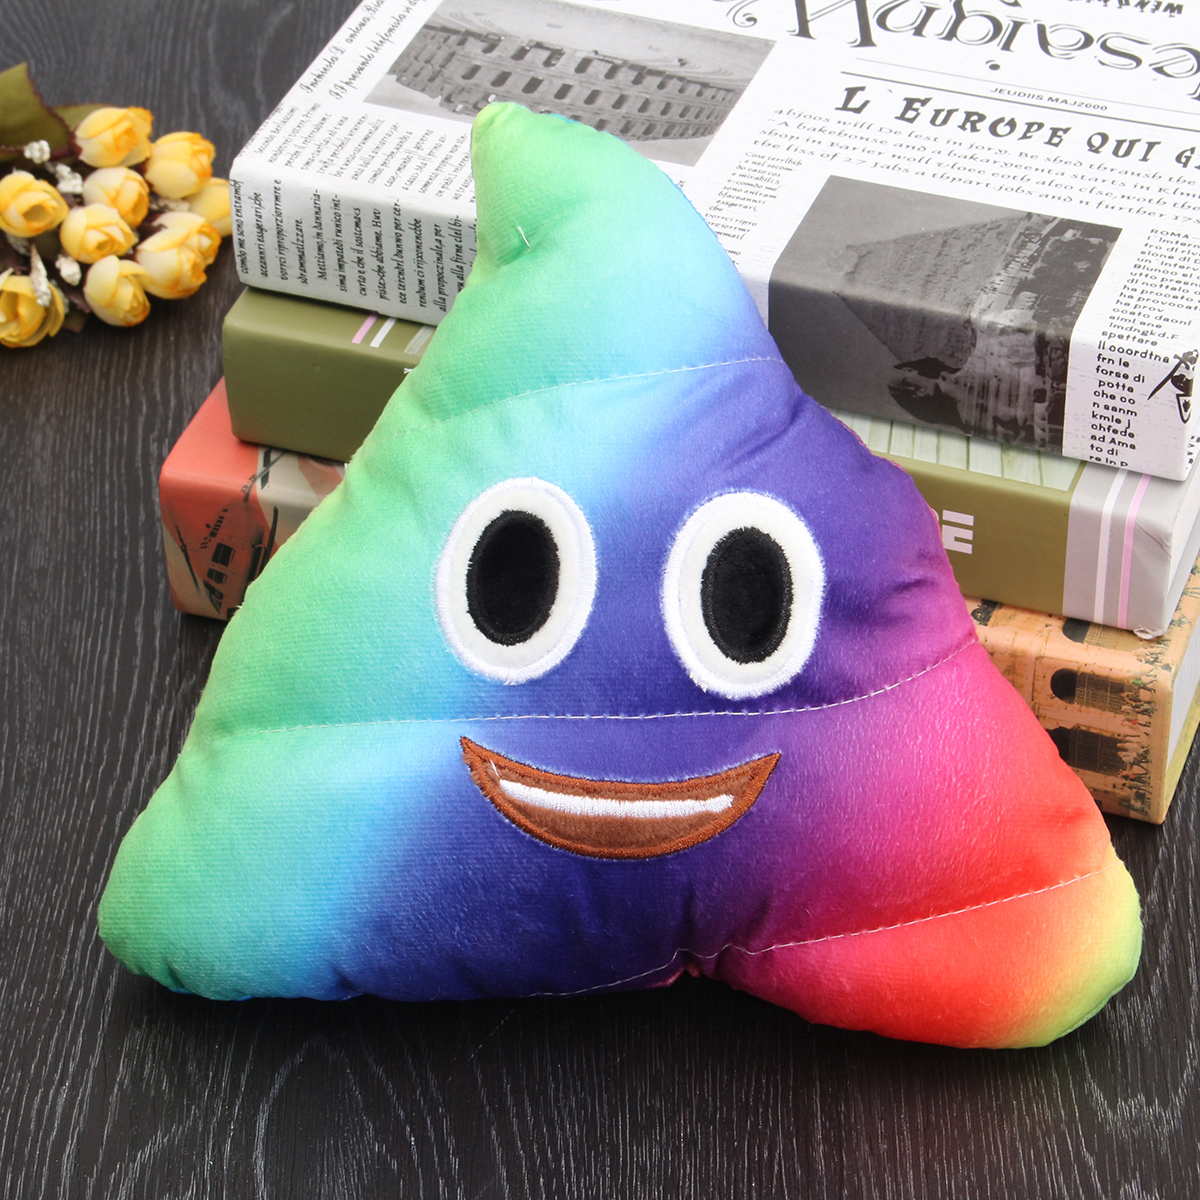 26x26cm-Plush-Funny-Soft-Toy-Colorful-Emoji-Emoticon-Poop-Shape-Pillow-Home-Office-Car-Cushion-1099639